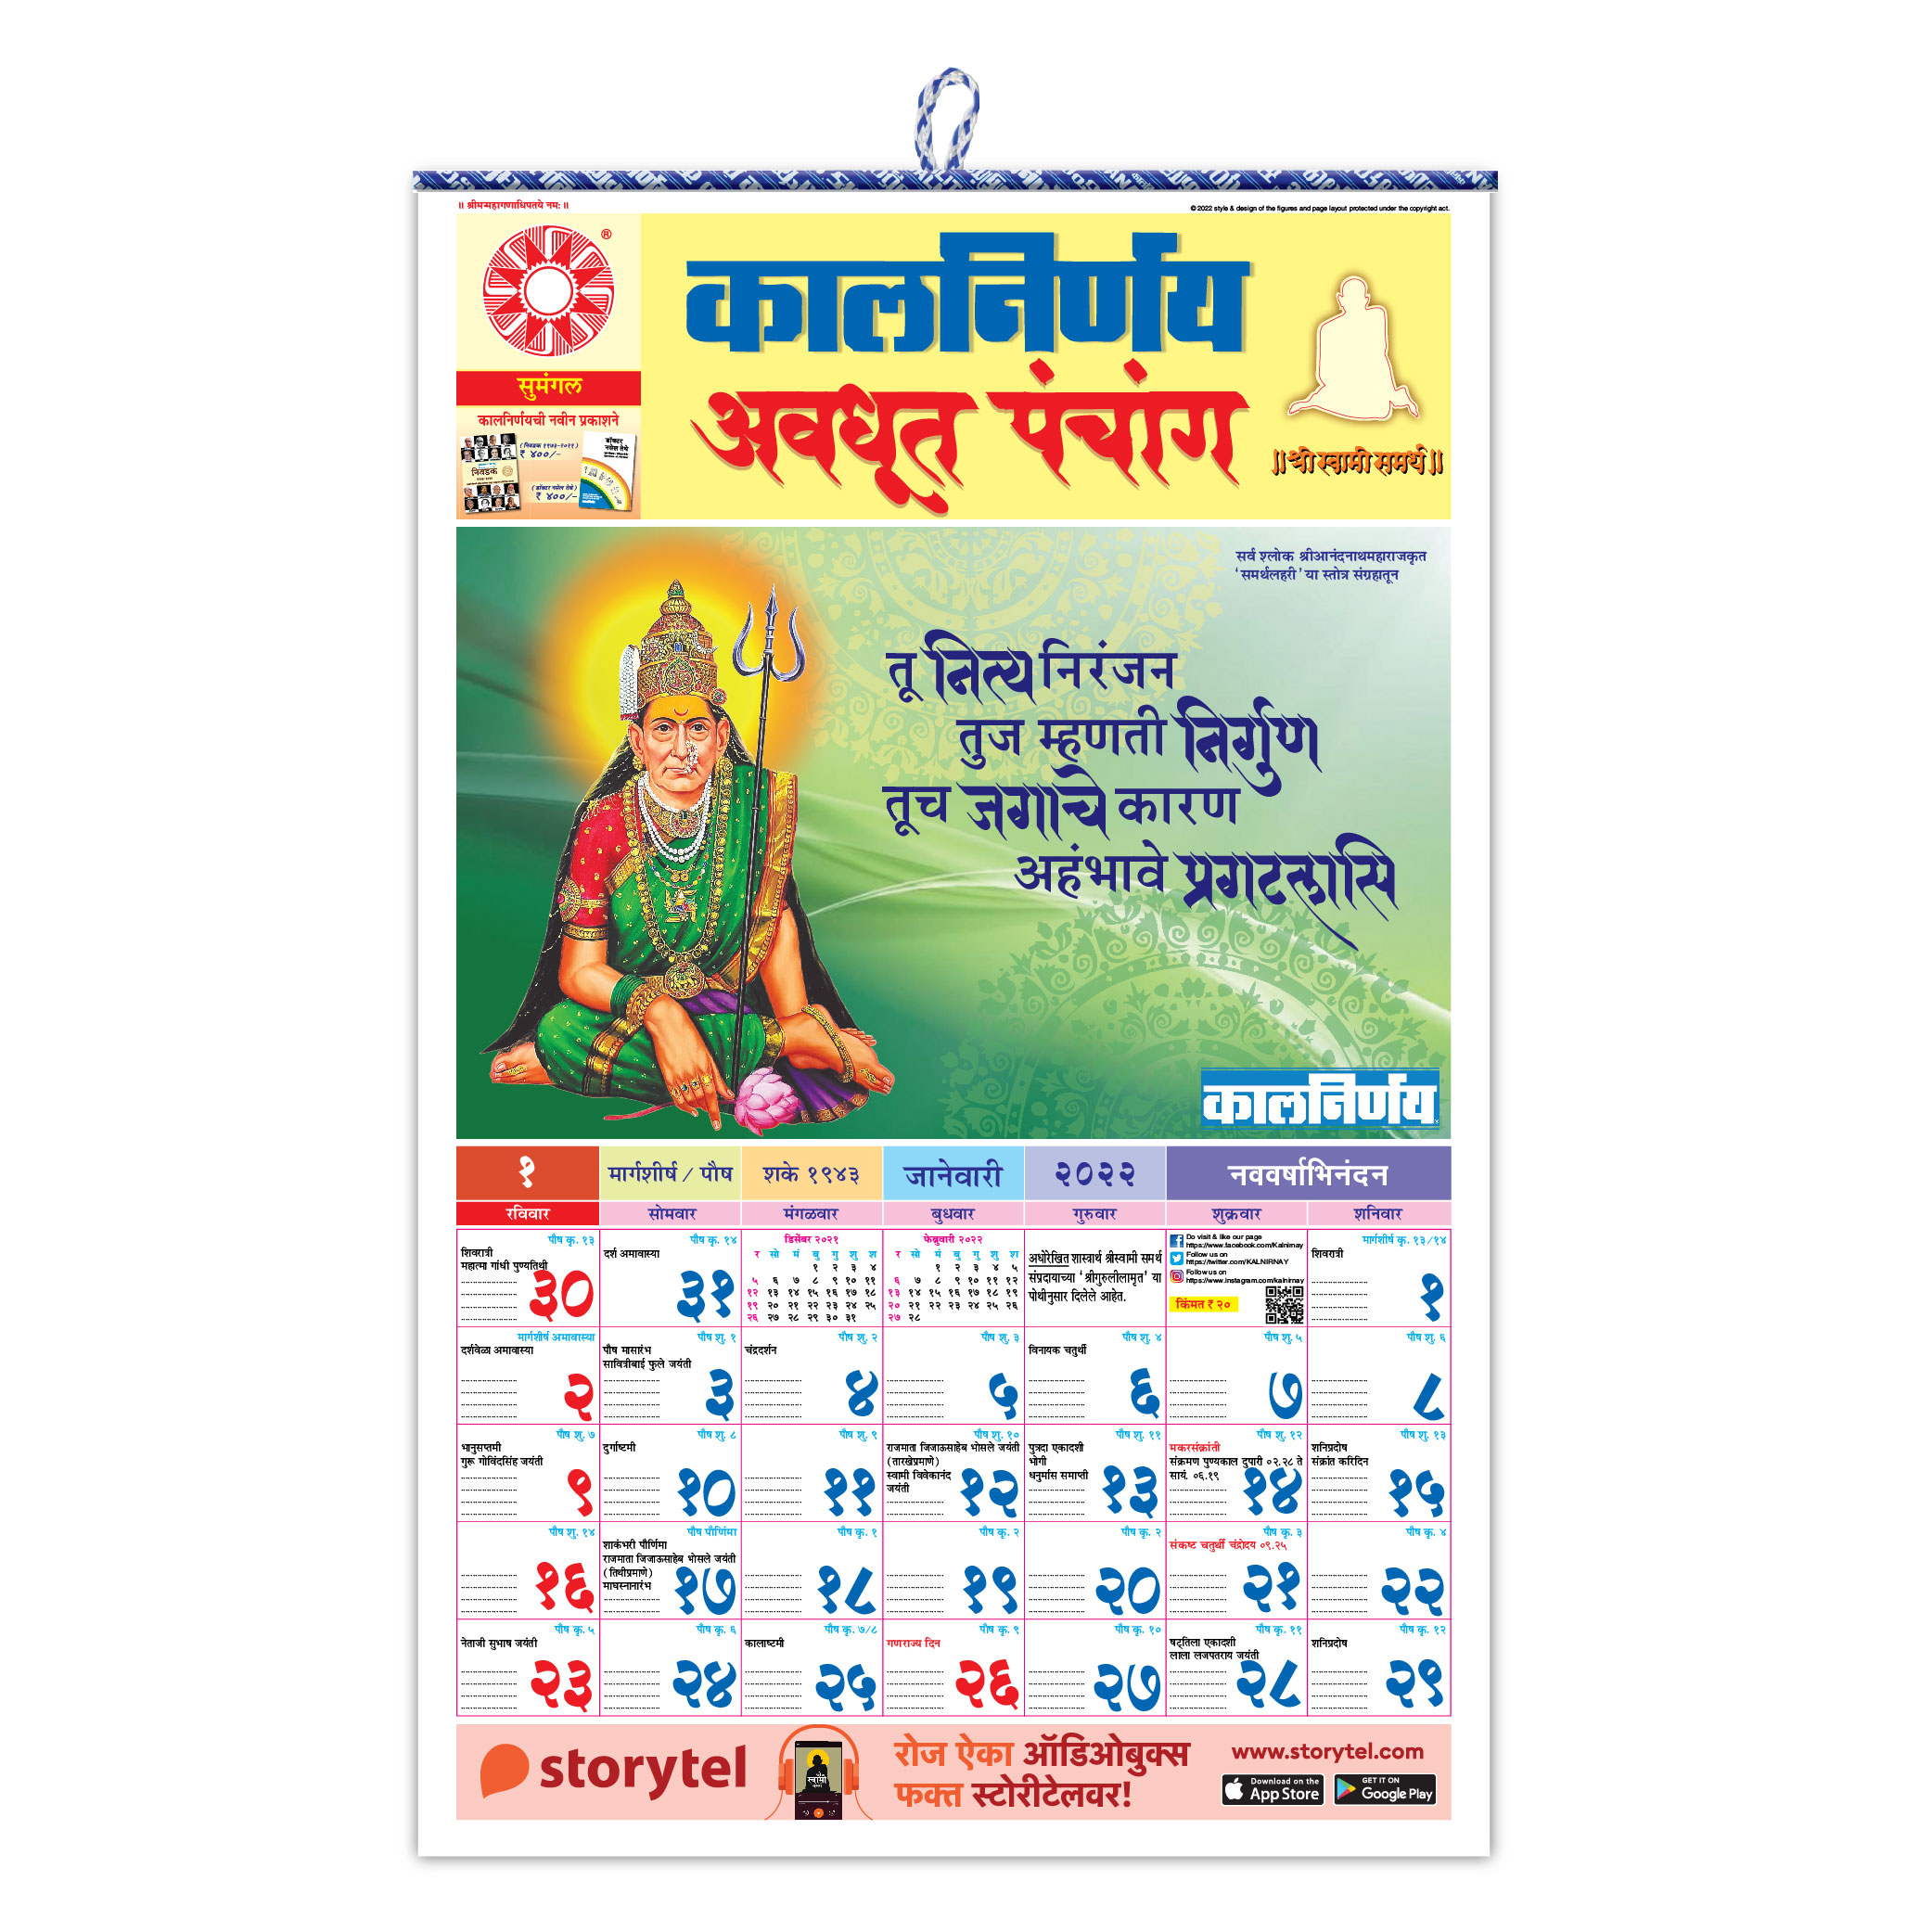 Shree Swami Samarth | श्री स्वामी समर्थ | Shri Swami Samarth | Akkalkot Swami Samarth | Swami Samarth Math | Swami Samarth | shree swami samarth calendar | shree swami samarth calendar 2022